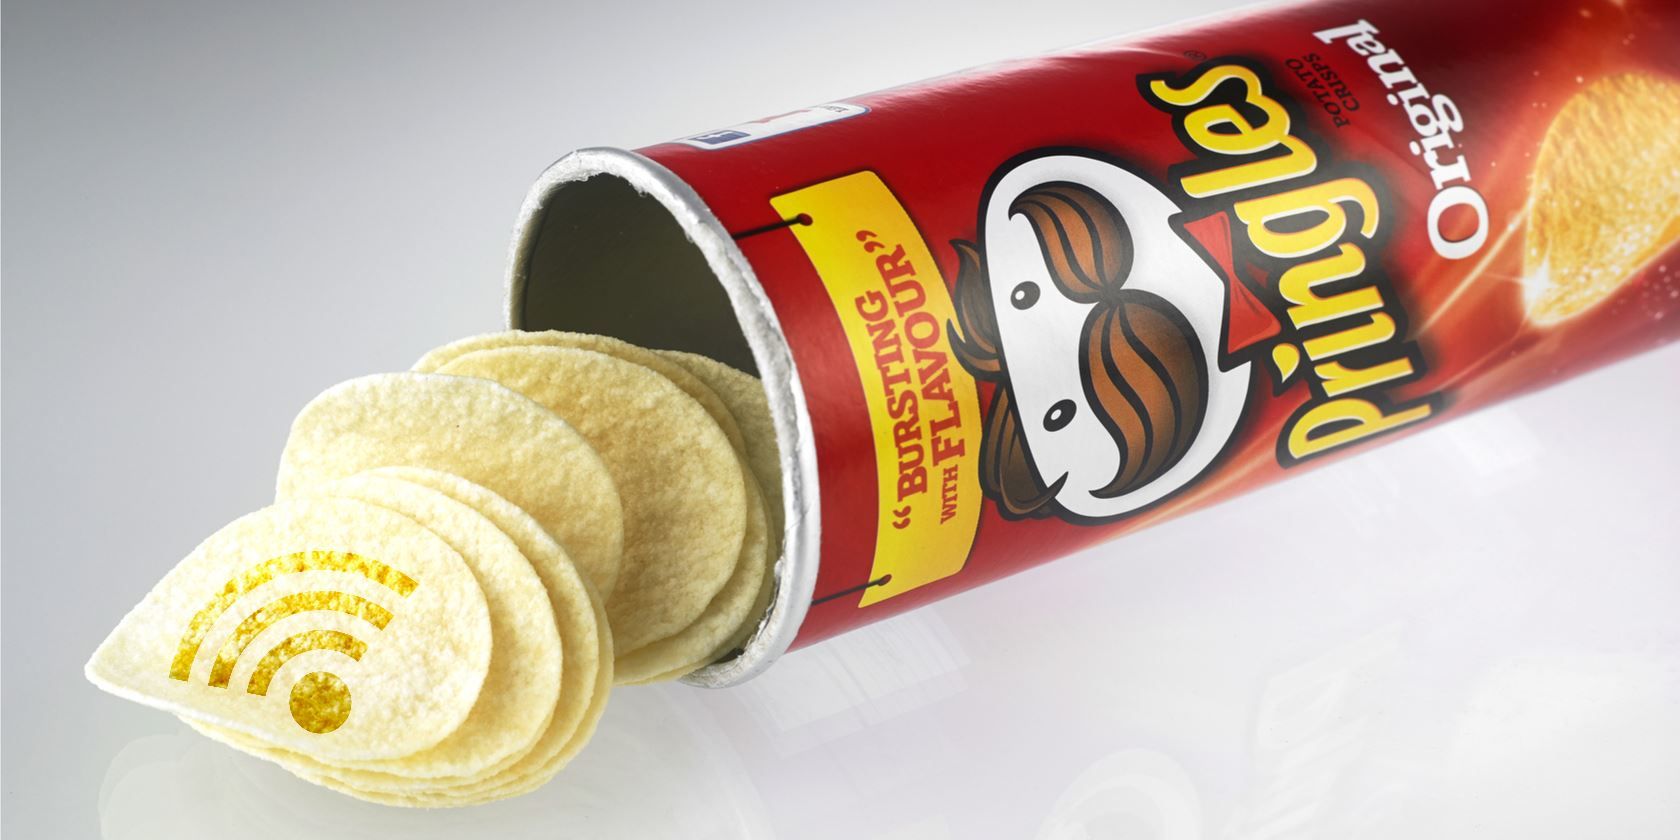 pringles original potato chips - Burst Our With Pringles Potato Original